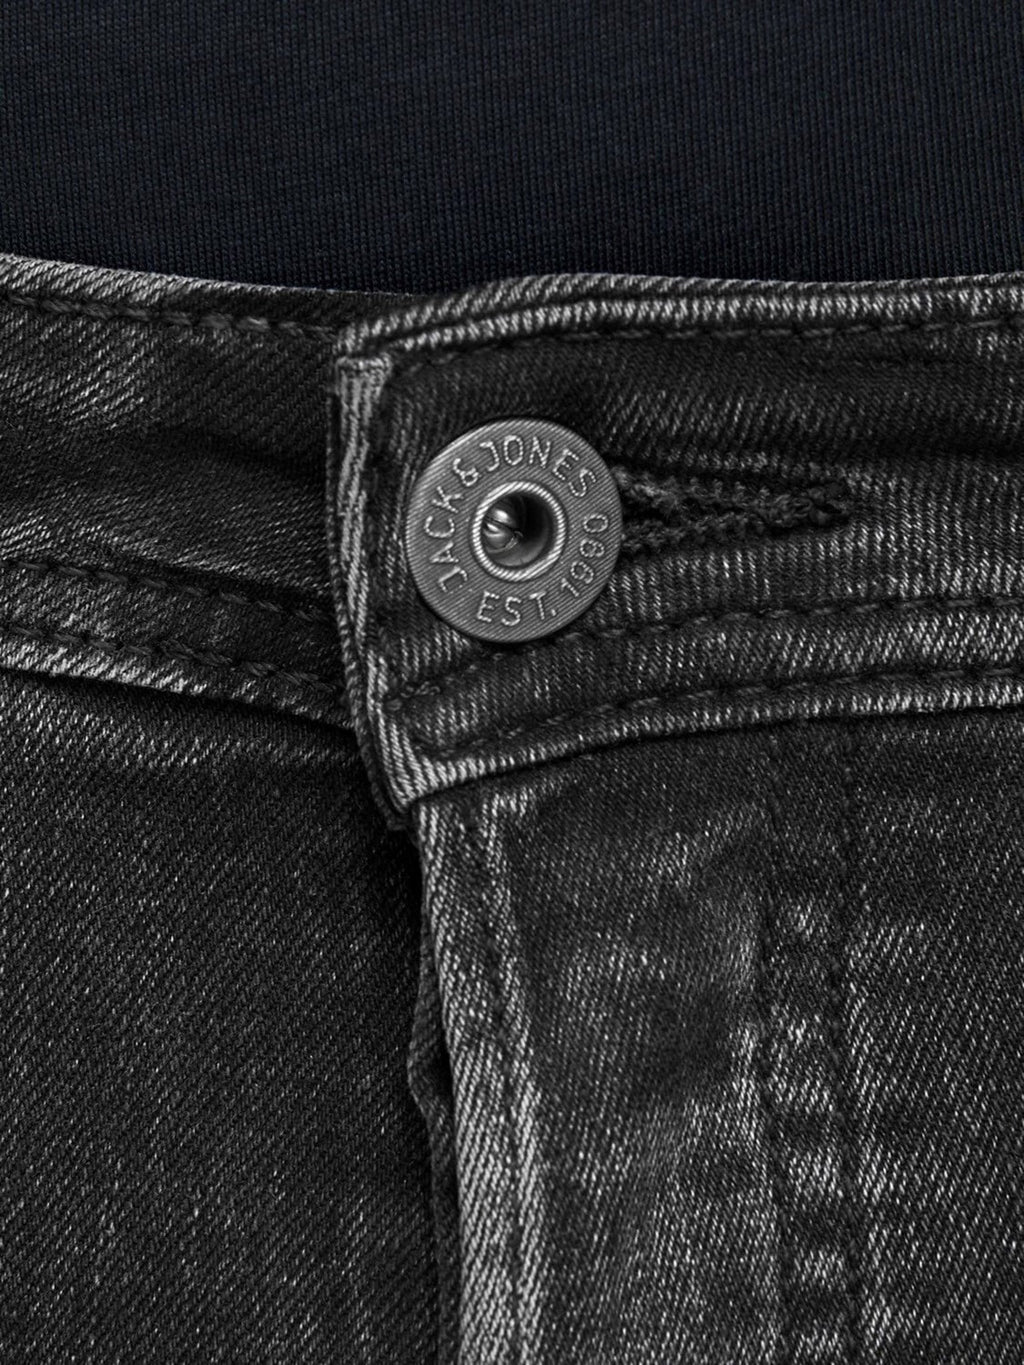 Jeans originale di Glenn - denim nero